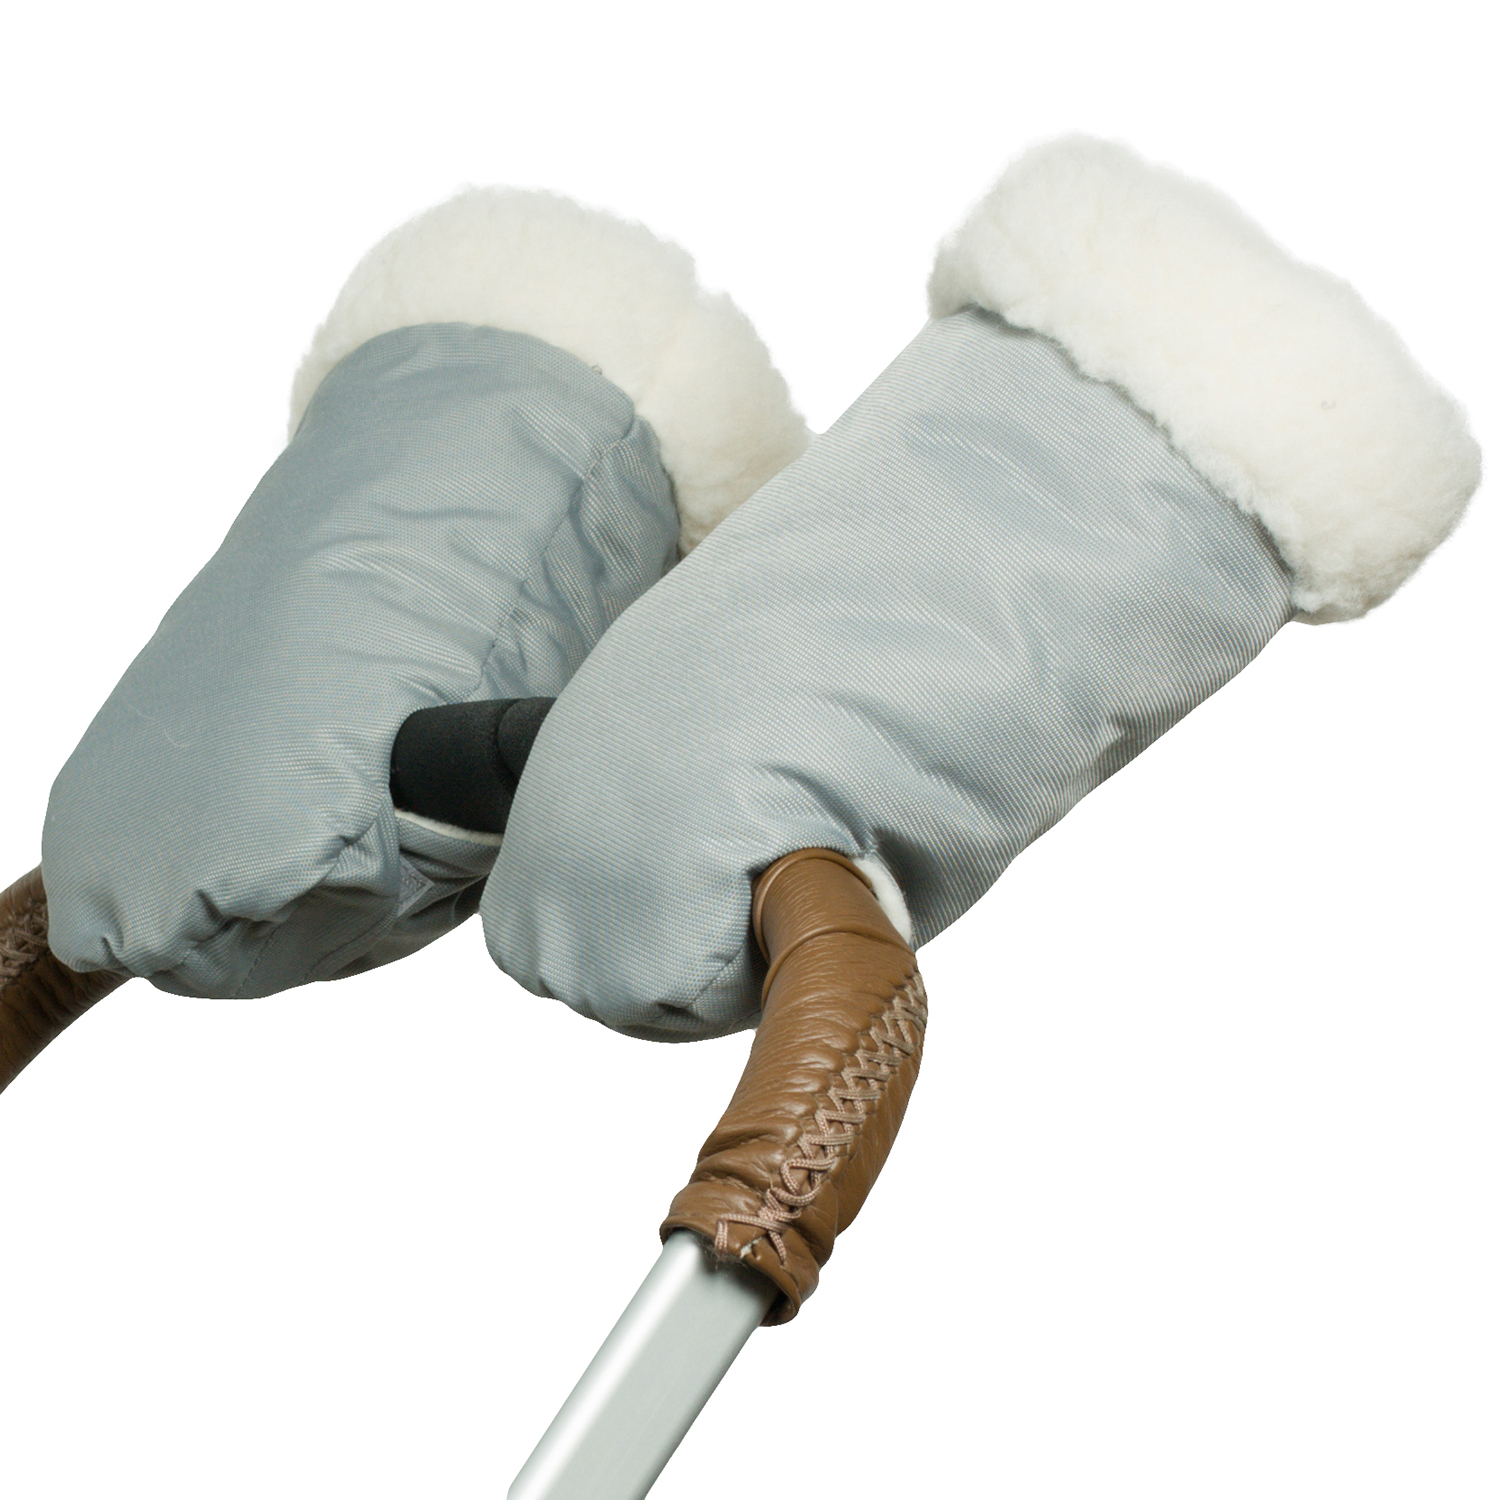 Муфта-рукавички для коляски Чудо-чадо меховая Прайм серая МРМ06-001 - фото 4